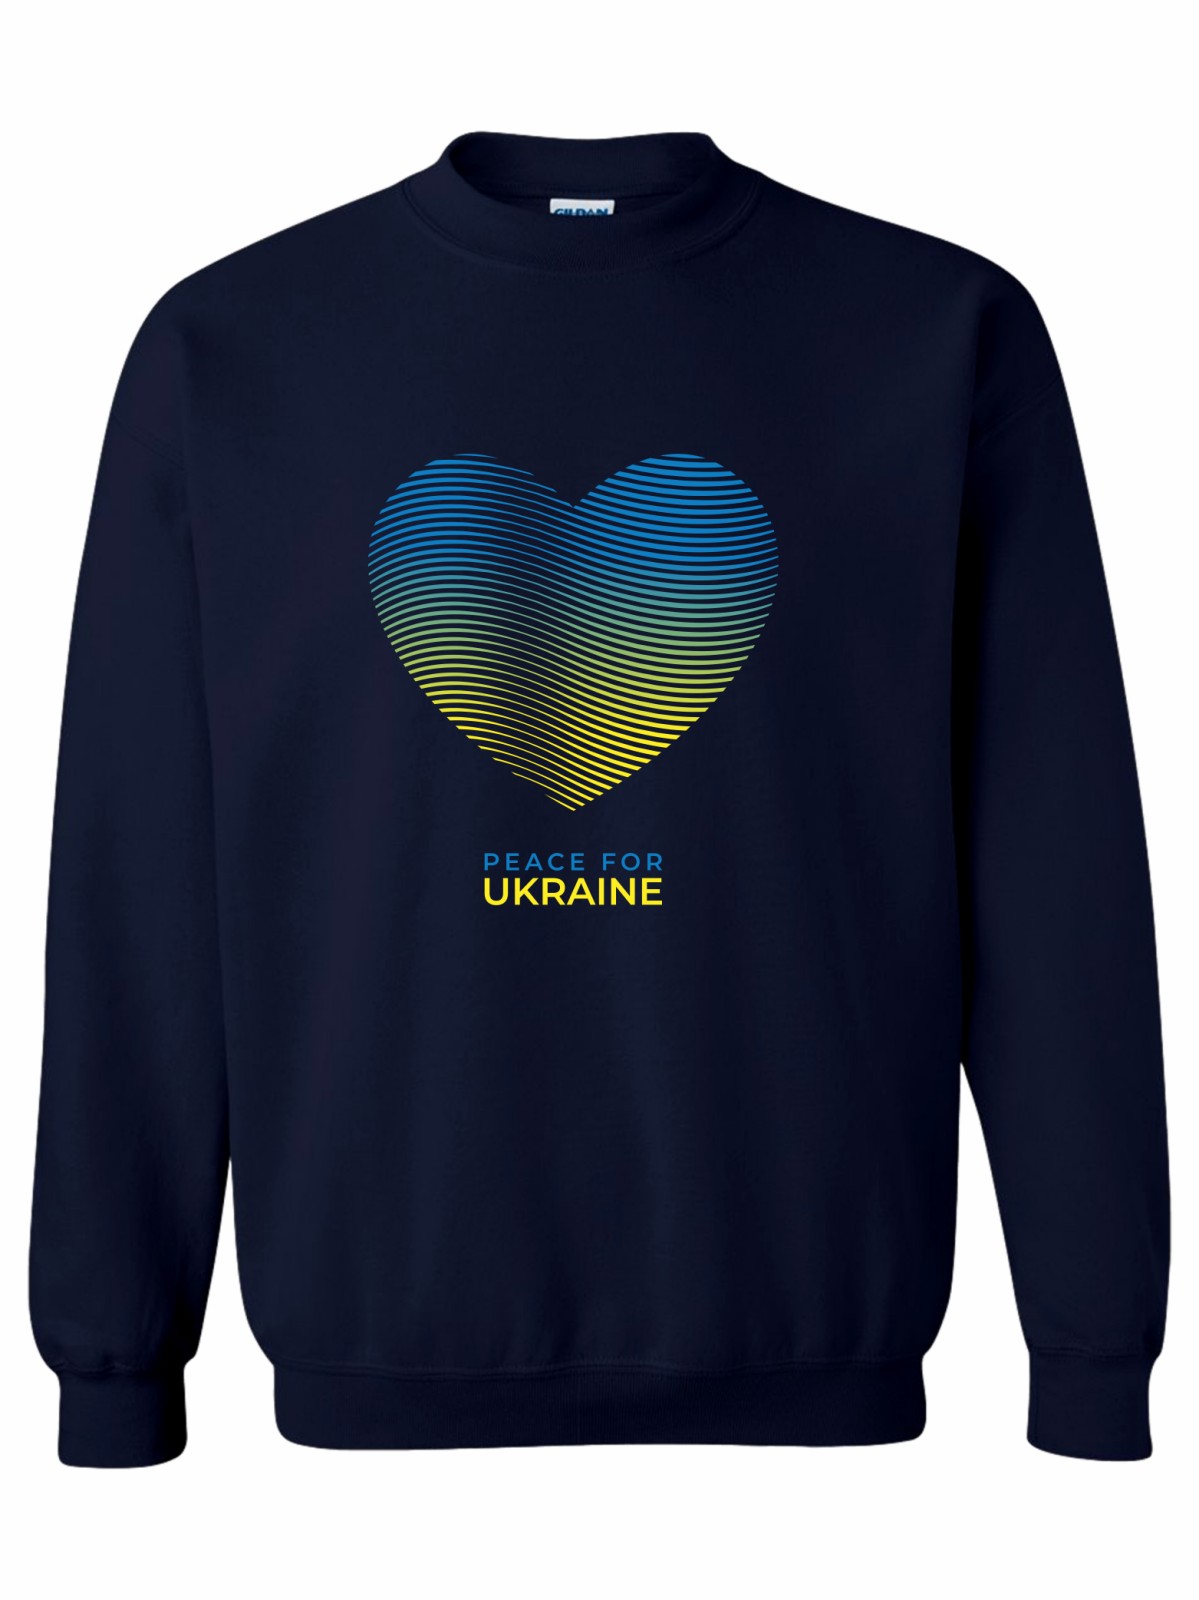 Термоаппликация Сердце Украина, 21*21,2см, желтый, голубой /термопринтер/, шт. Термоаппликация термопринтер